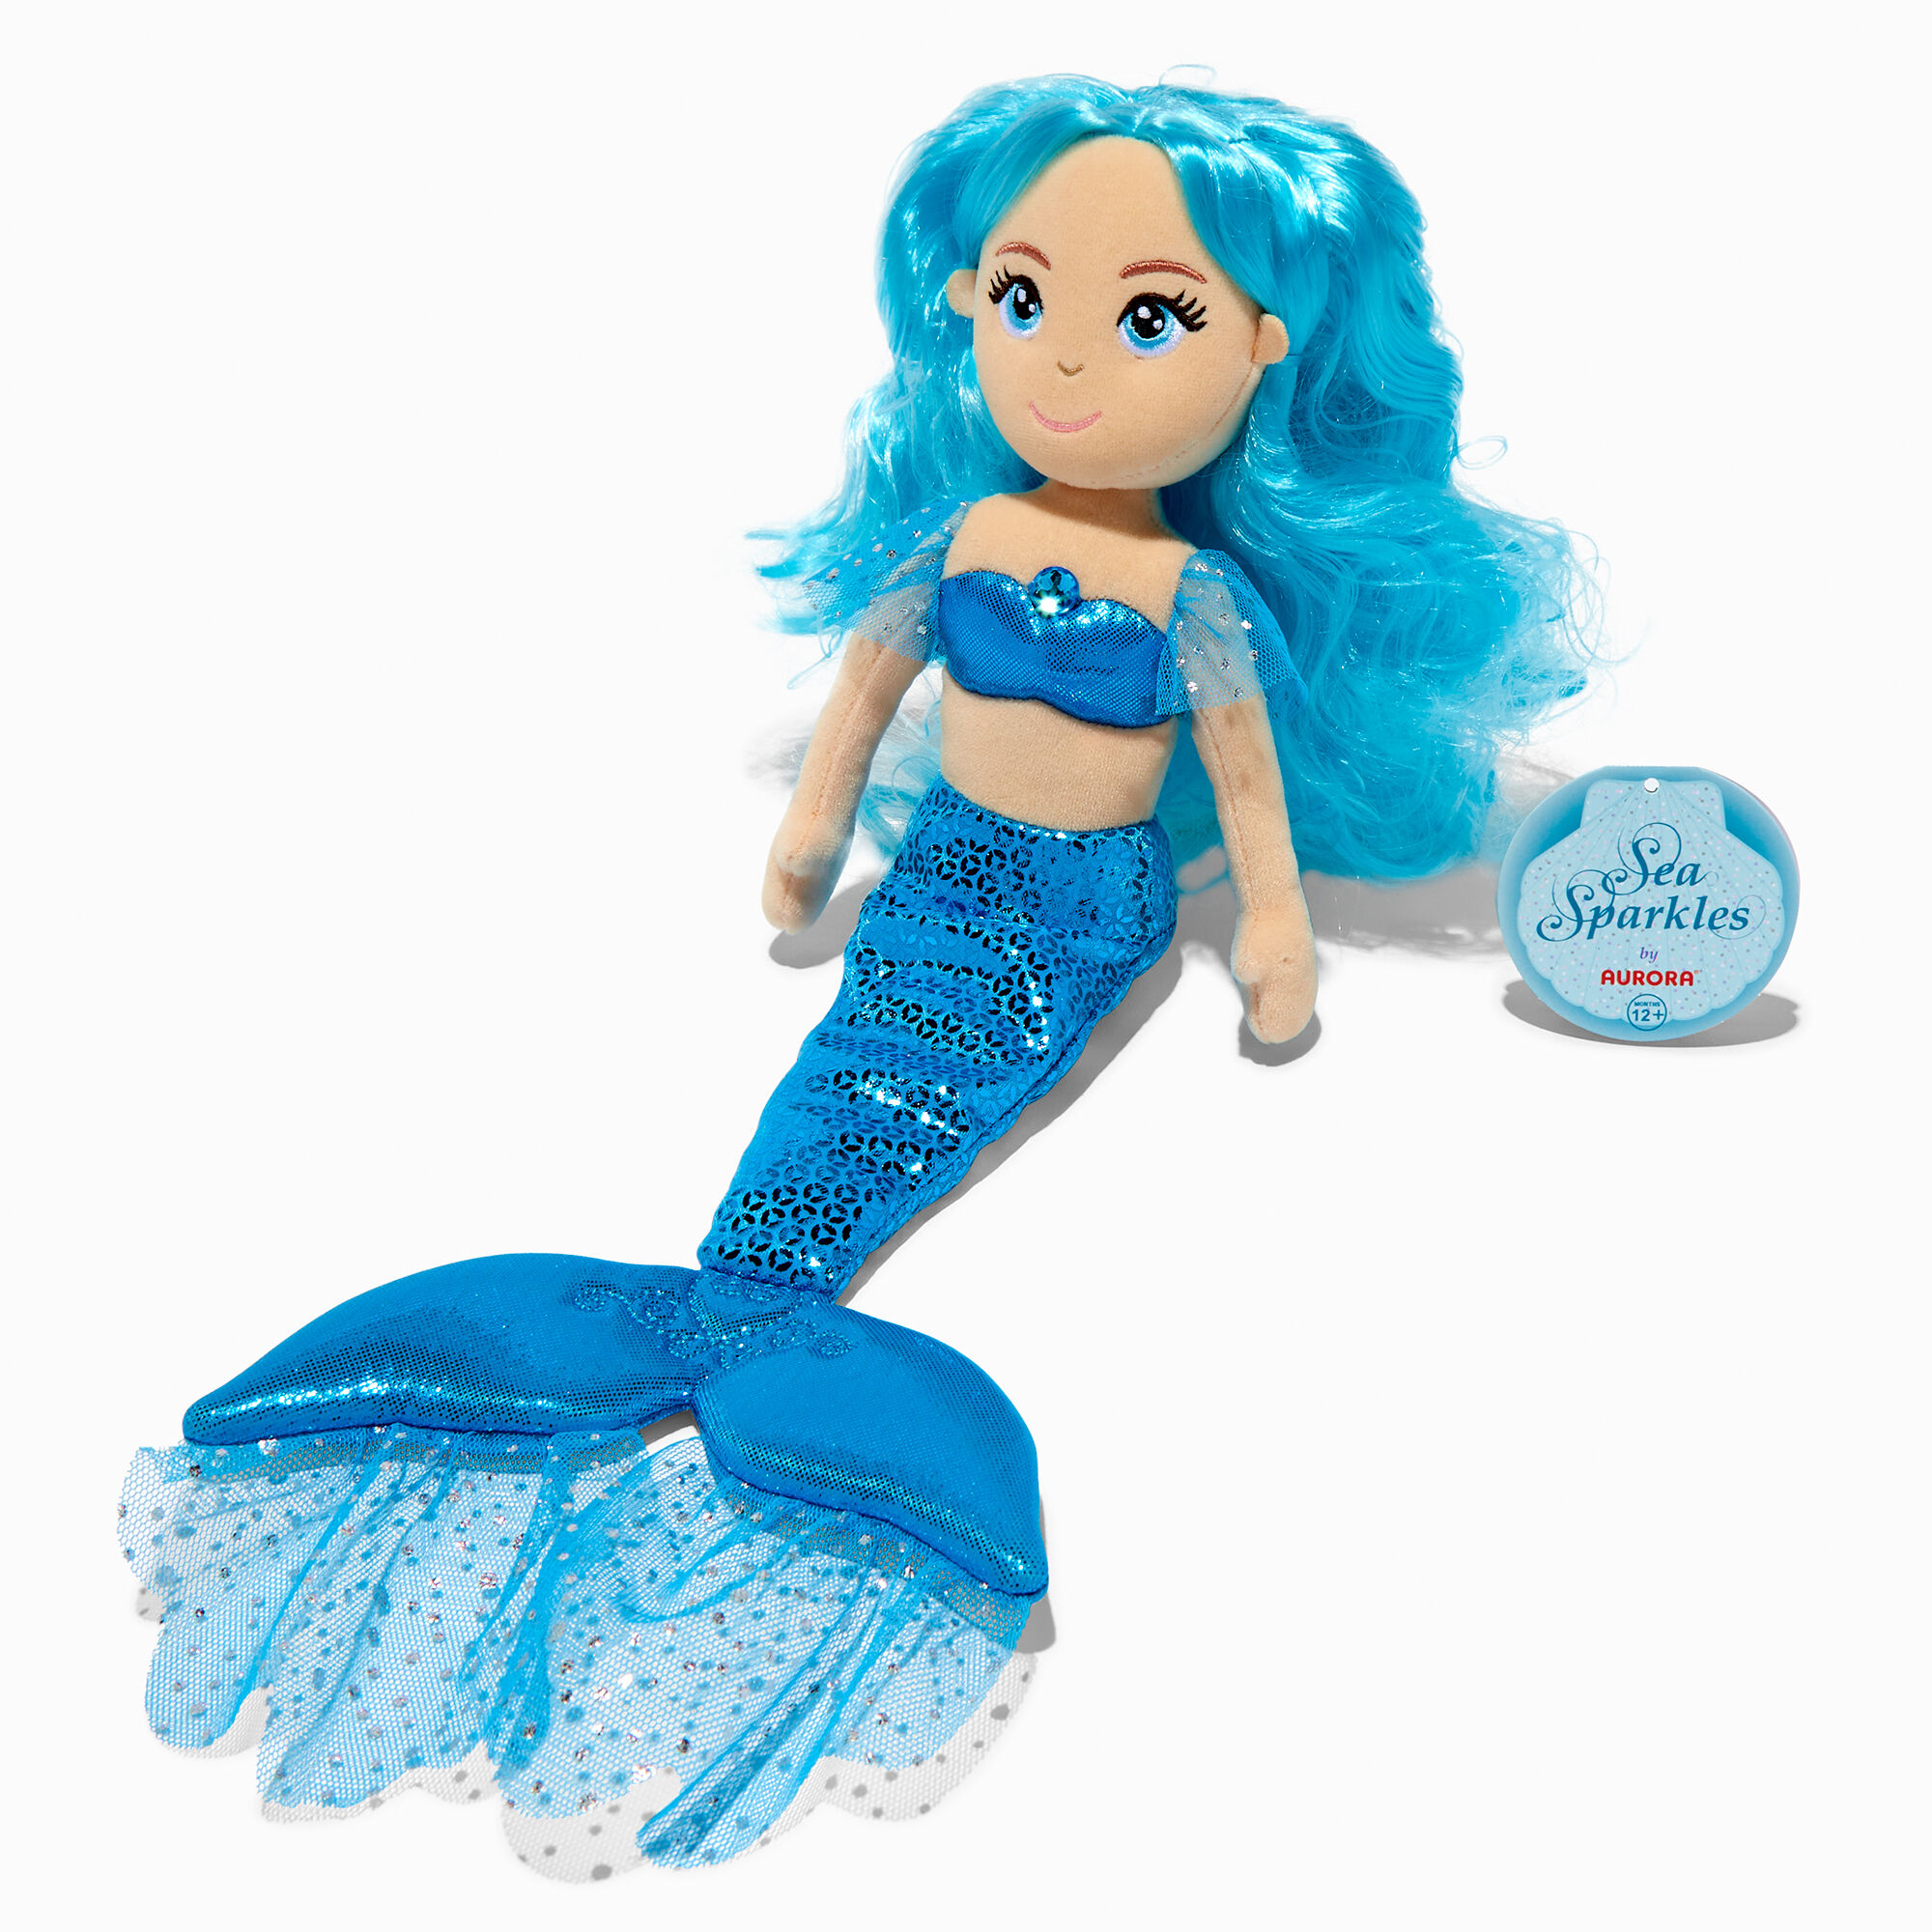 View Claires Sea Sparkles Aquamarine Mermaid Plush Toy information